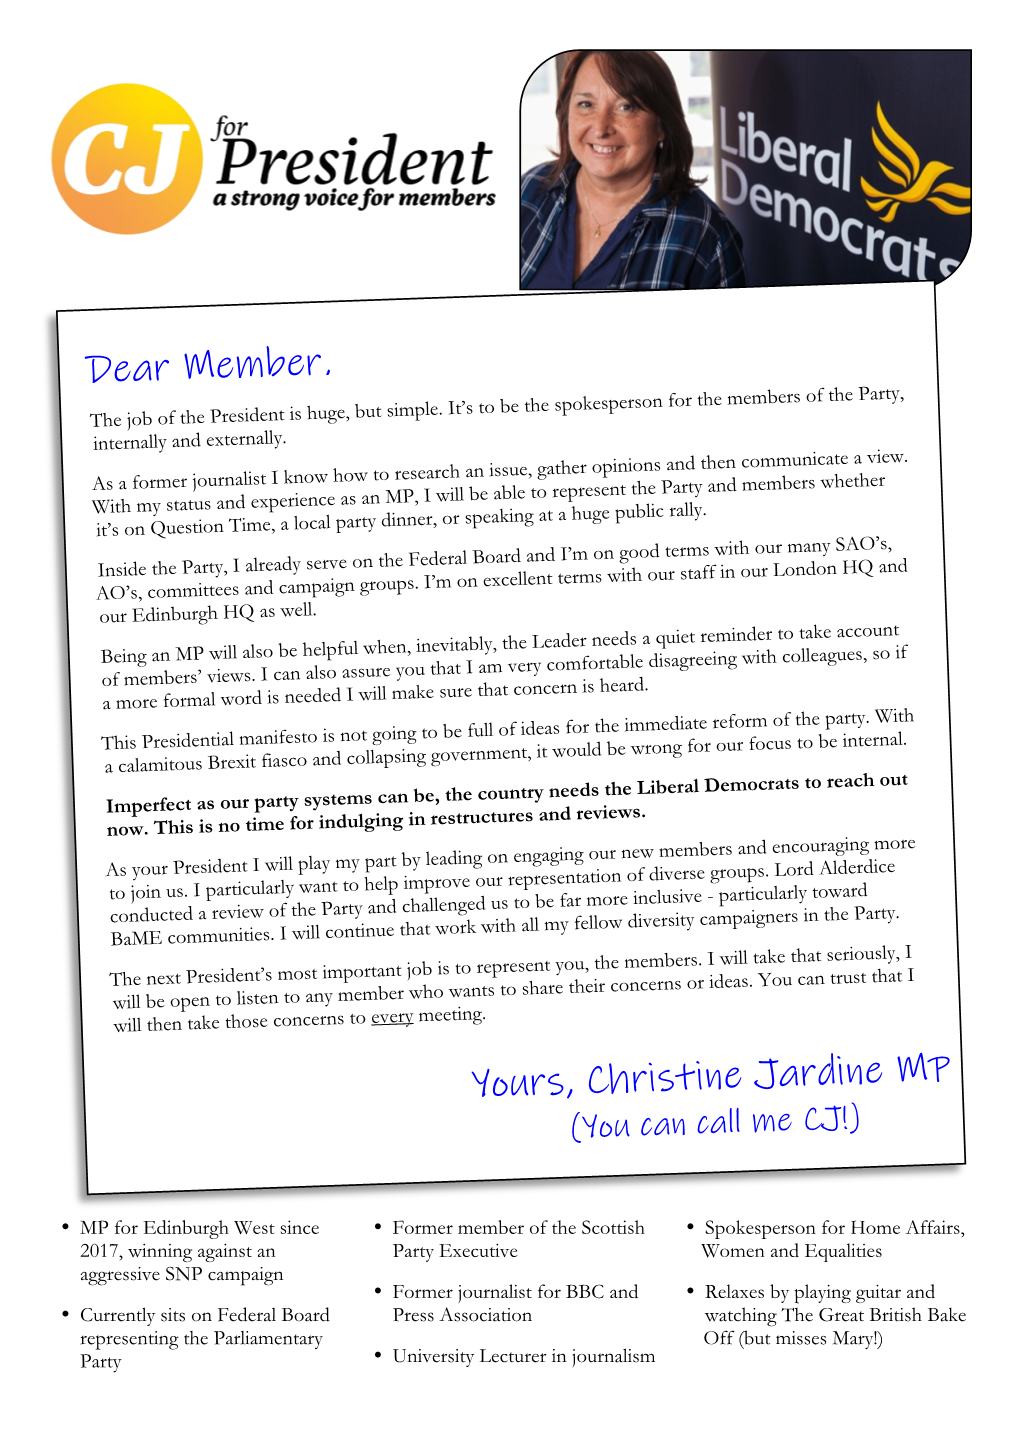 Dear Member, Yours, Christine Jardine MP